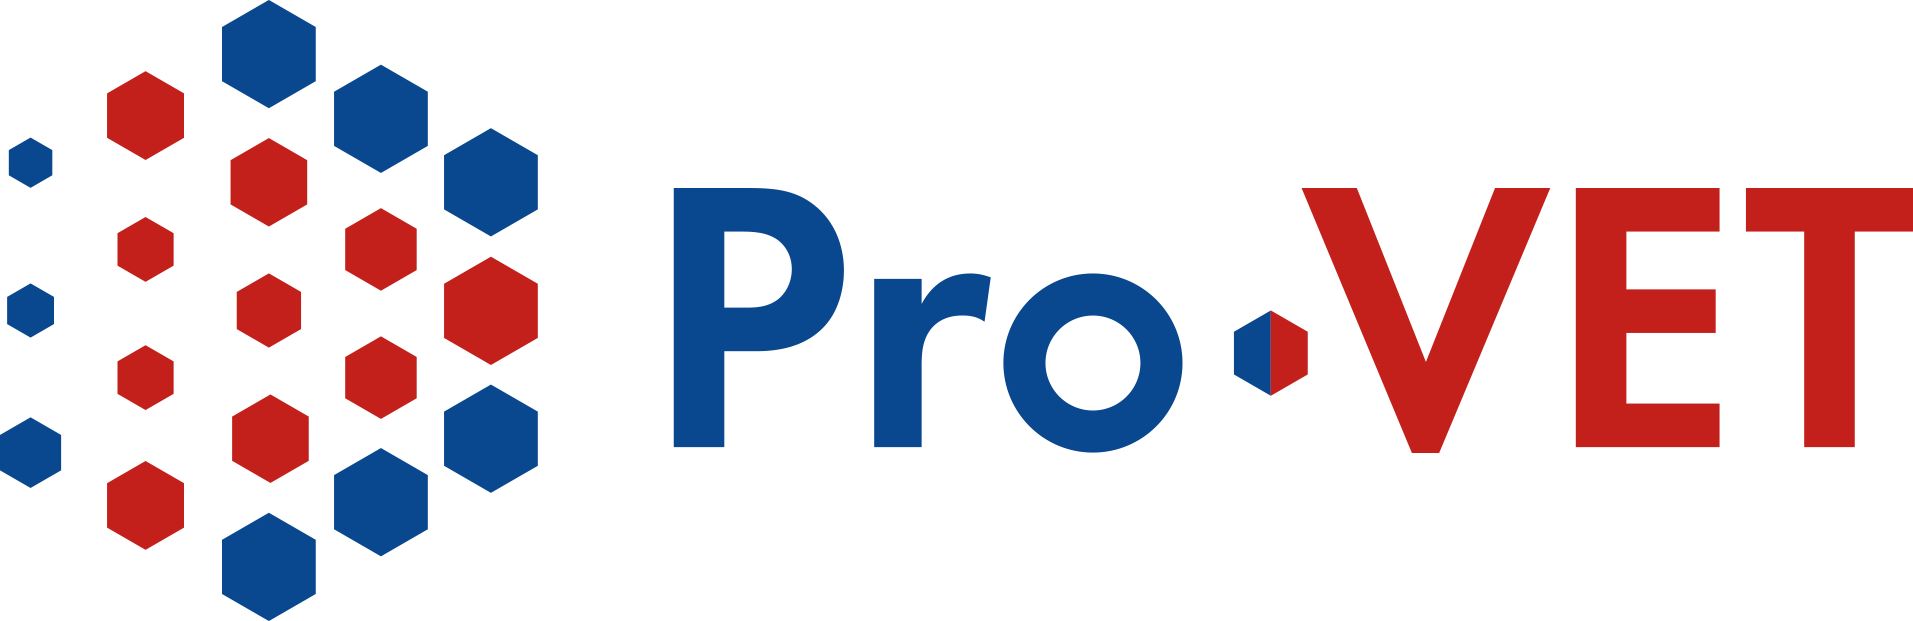 pro-vet_logo_approved-2